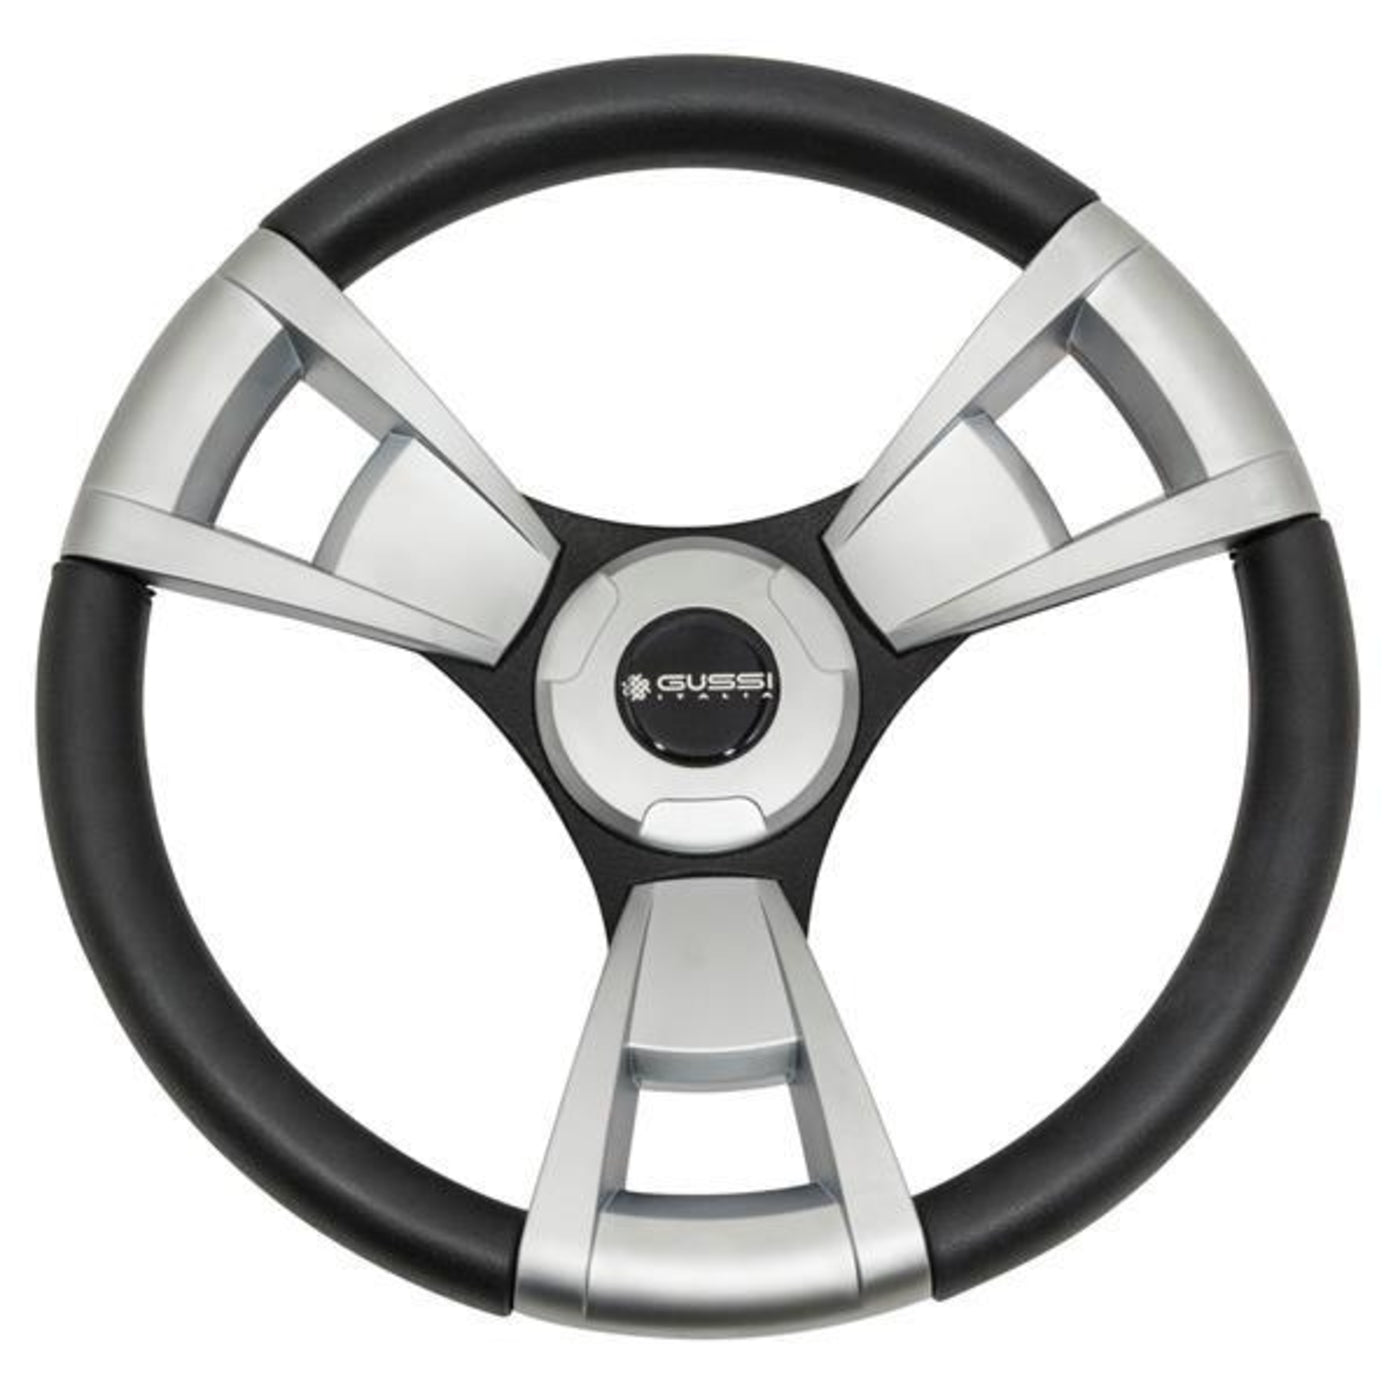 Gussi Italia¬Æ Model 13 Black/Brushed Steering Wheel For All Club Car DS Models